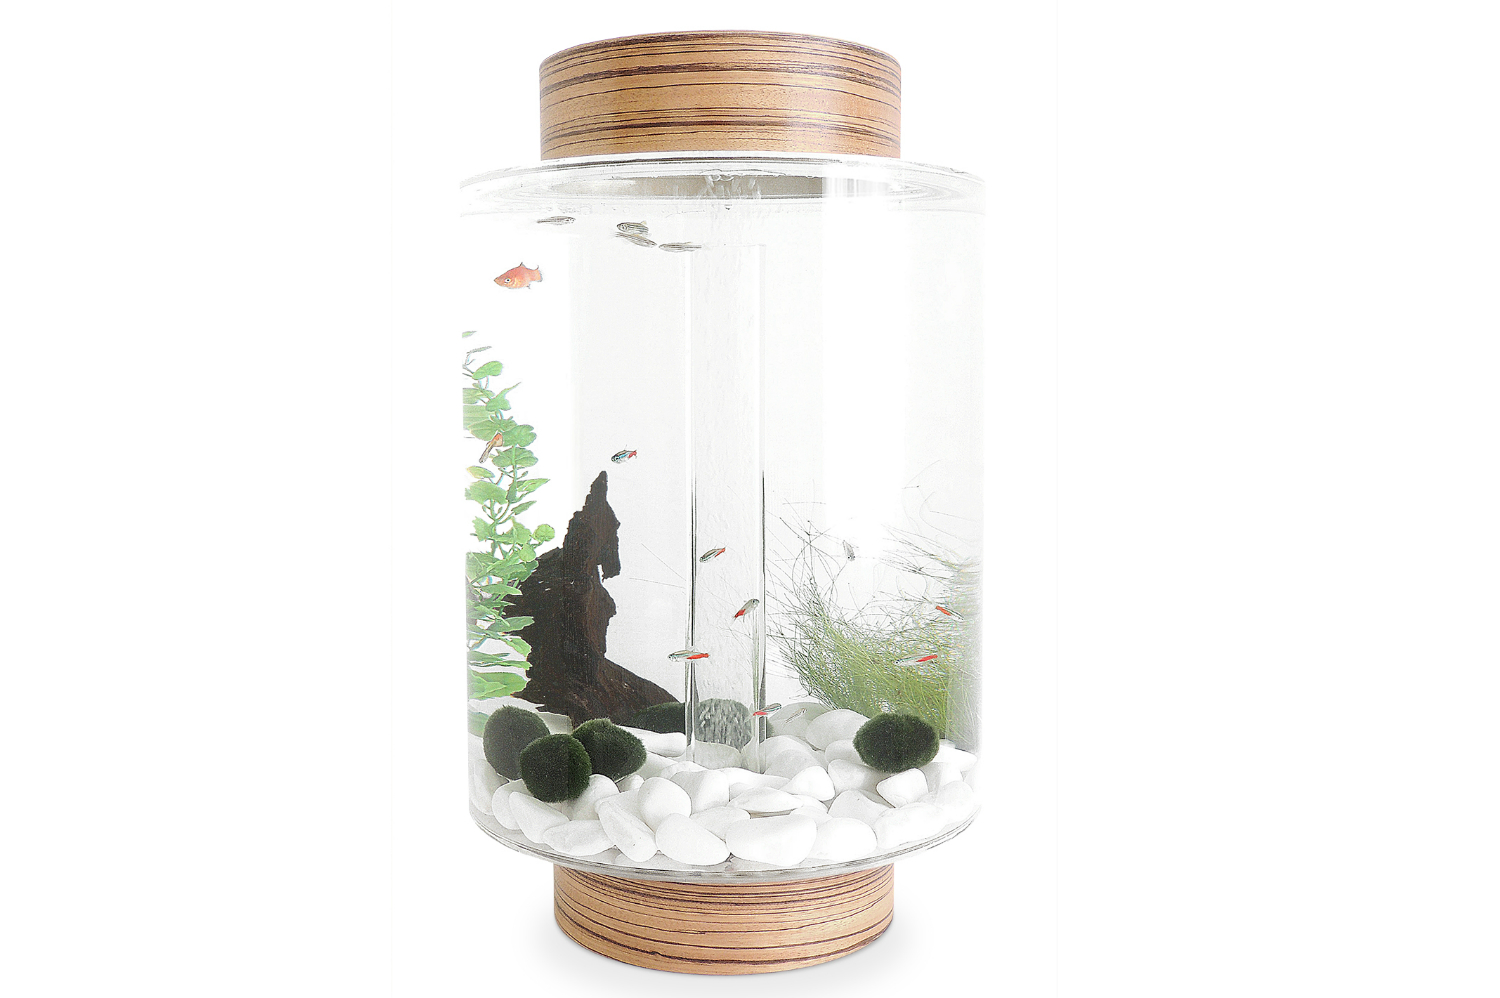 norrom aquarium is a beautiful 3d printable fish tank